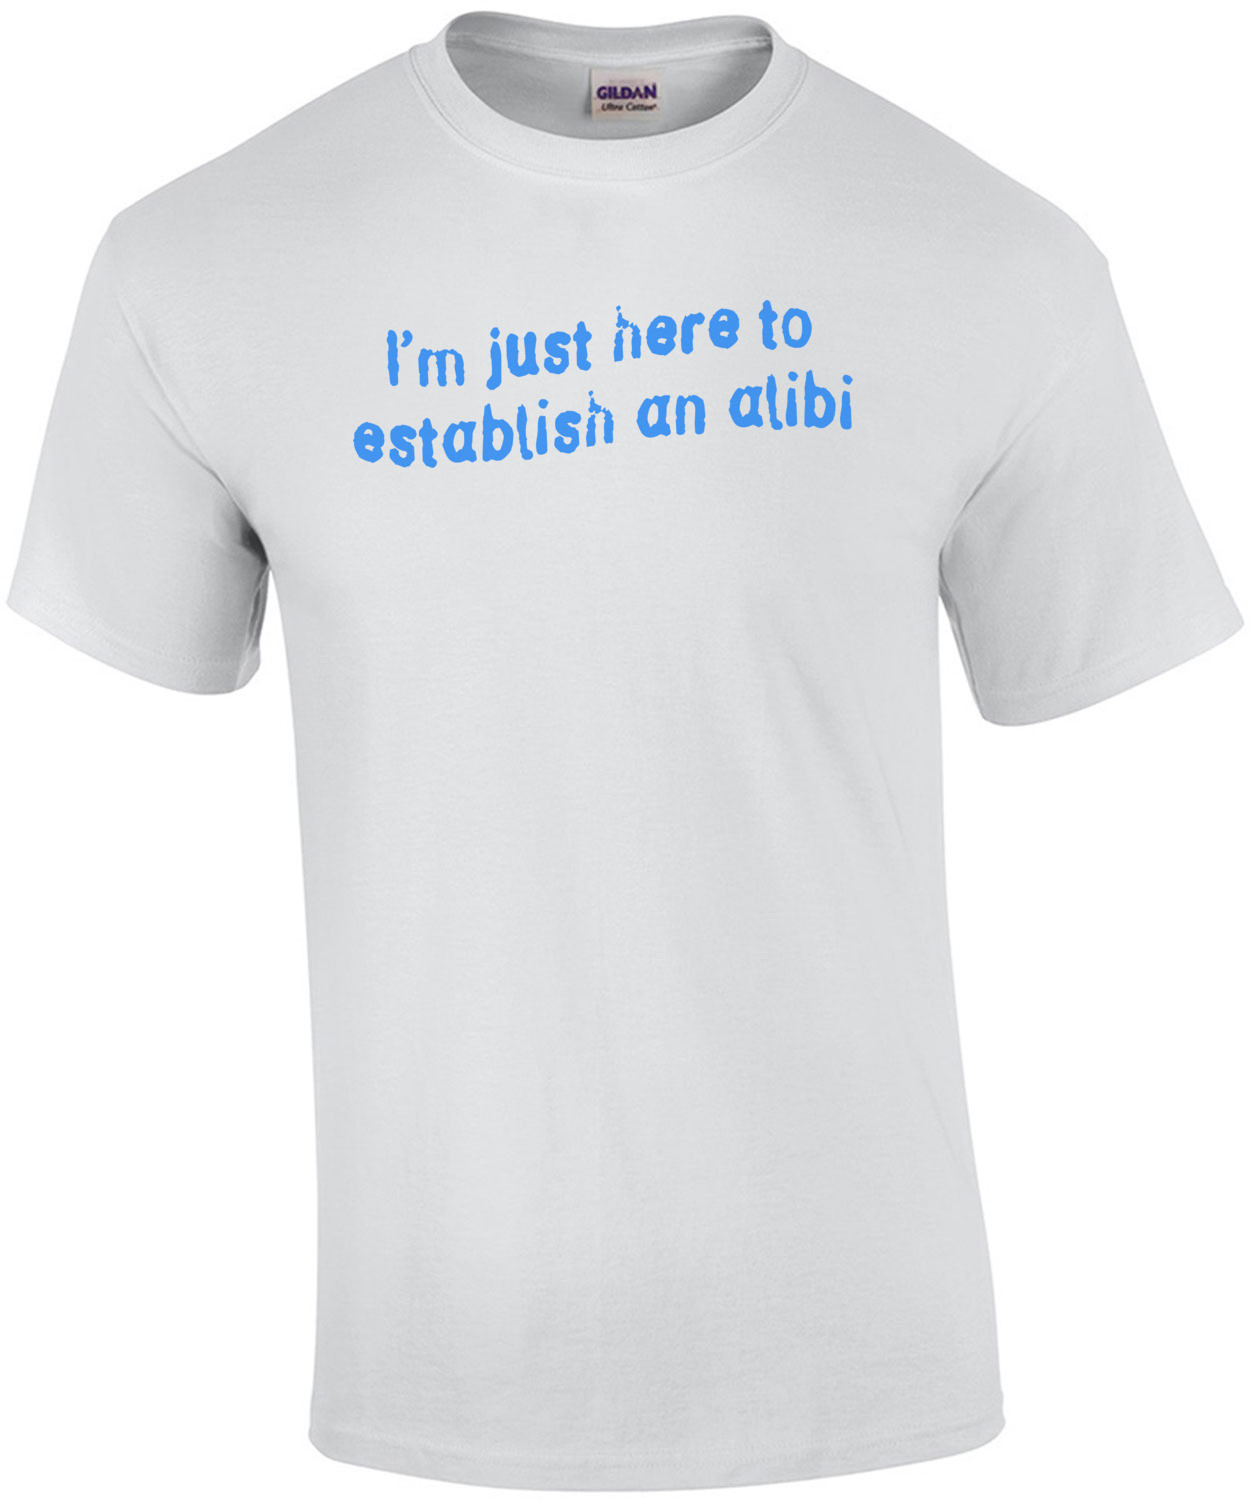 I'm Just Here To Establish an Alibi T-Shirt